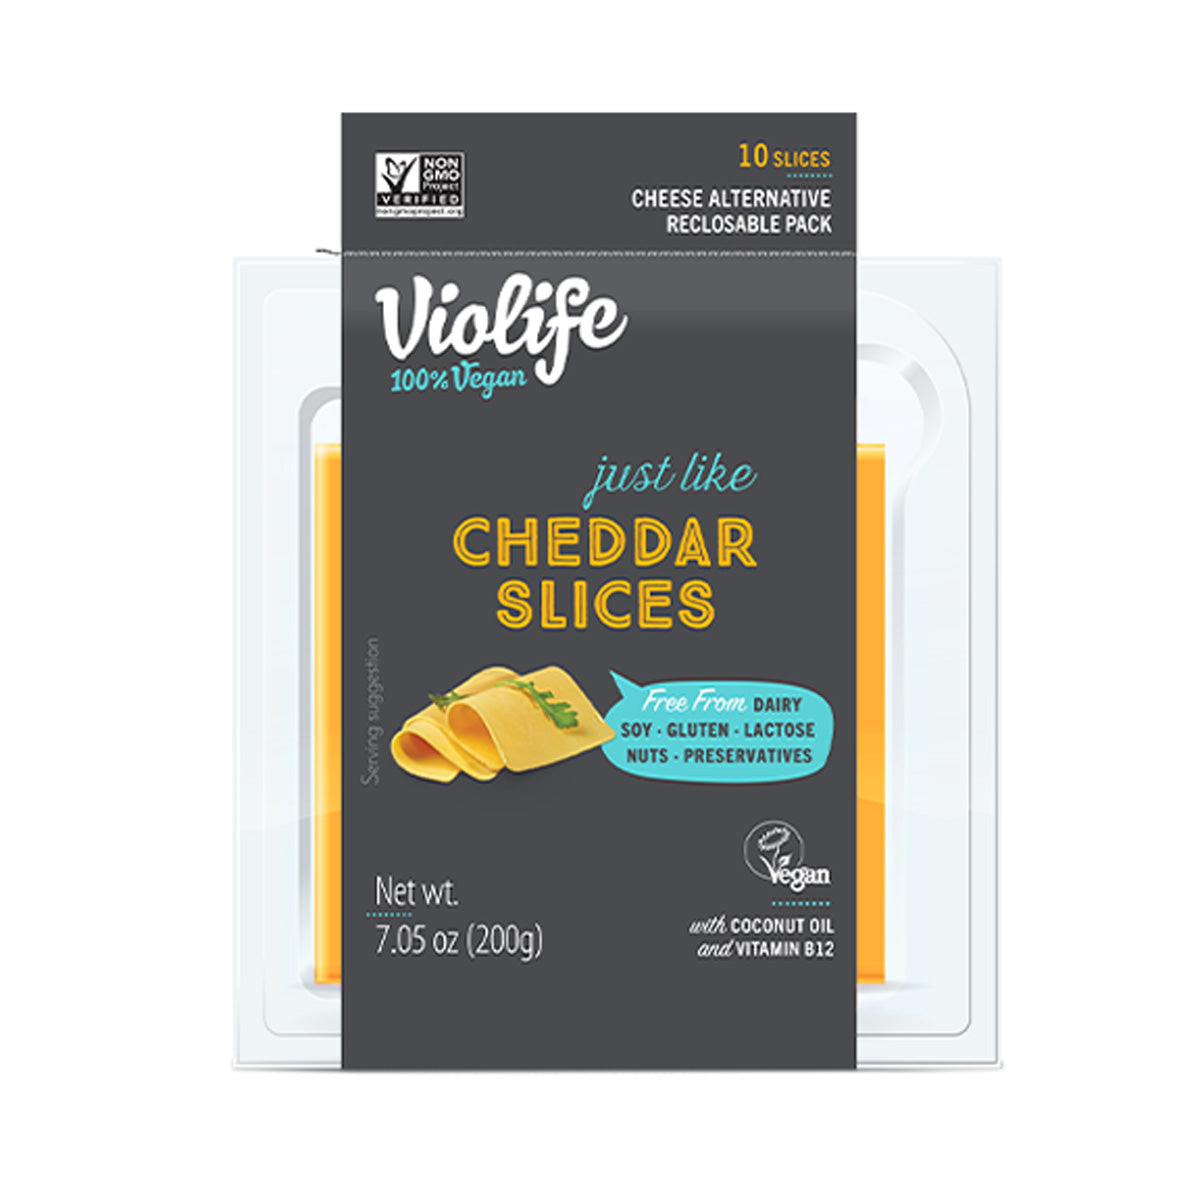 Violife Vegan Cheddar Slices Retail 7.05 OZ